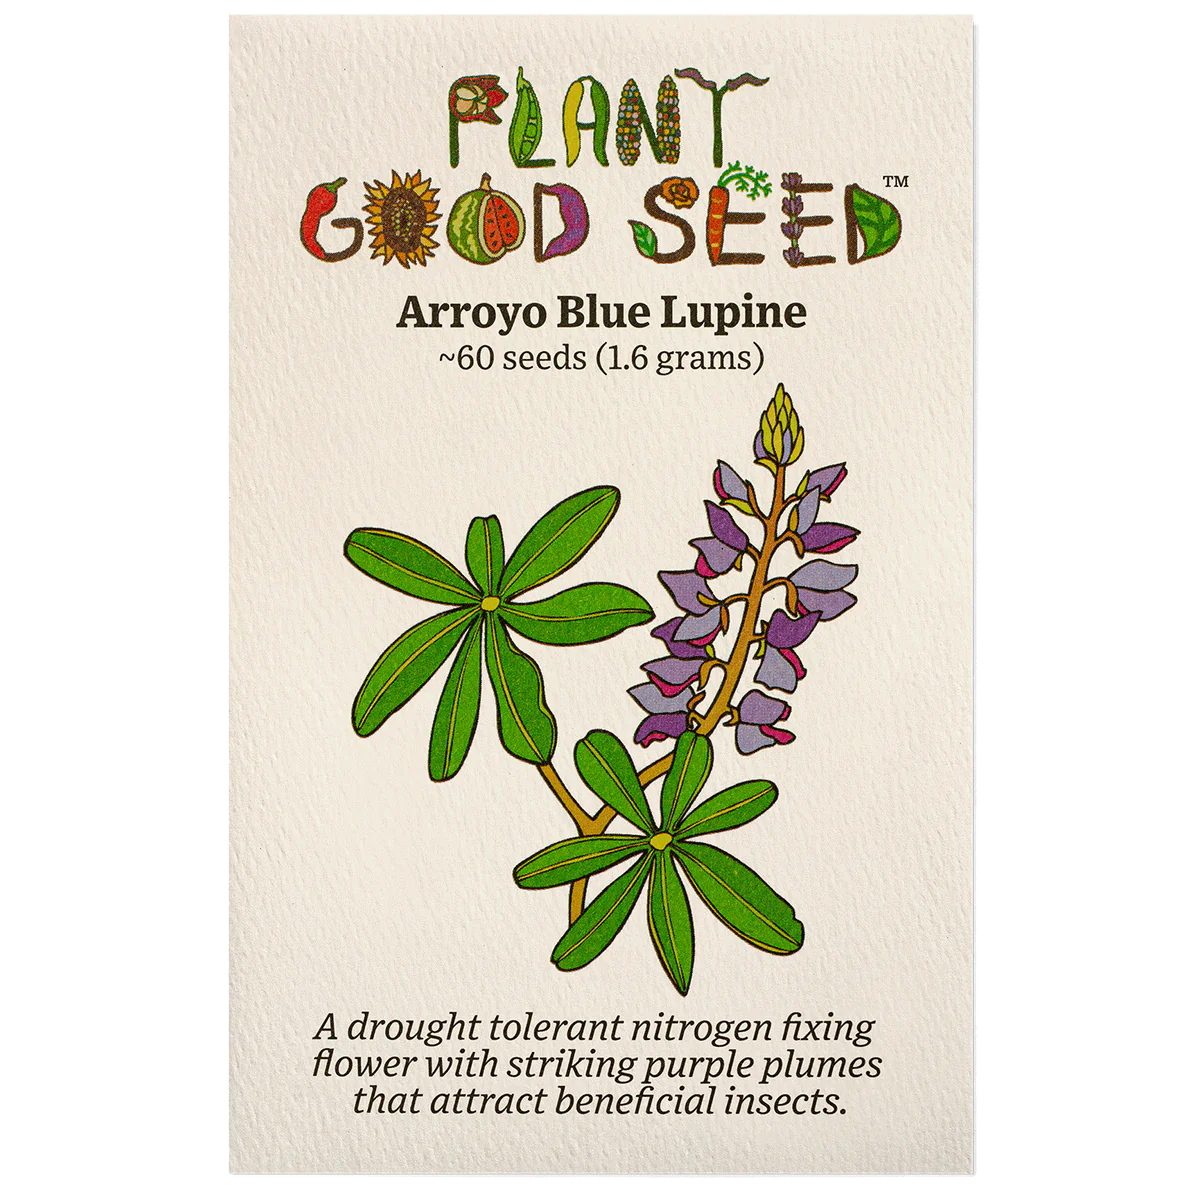 plant good seed / arroyo blue lupine